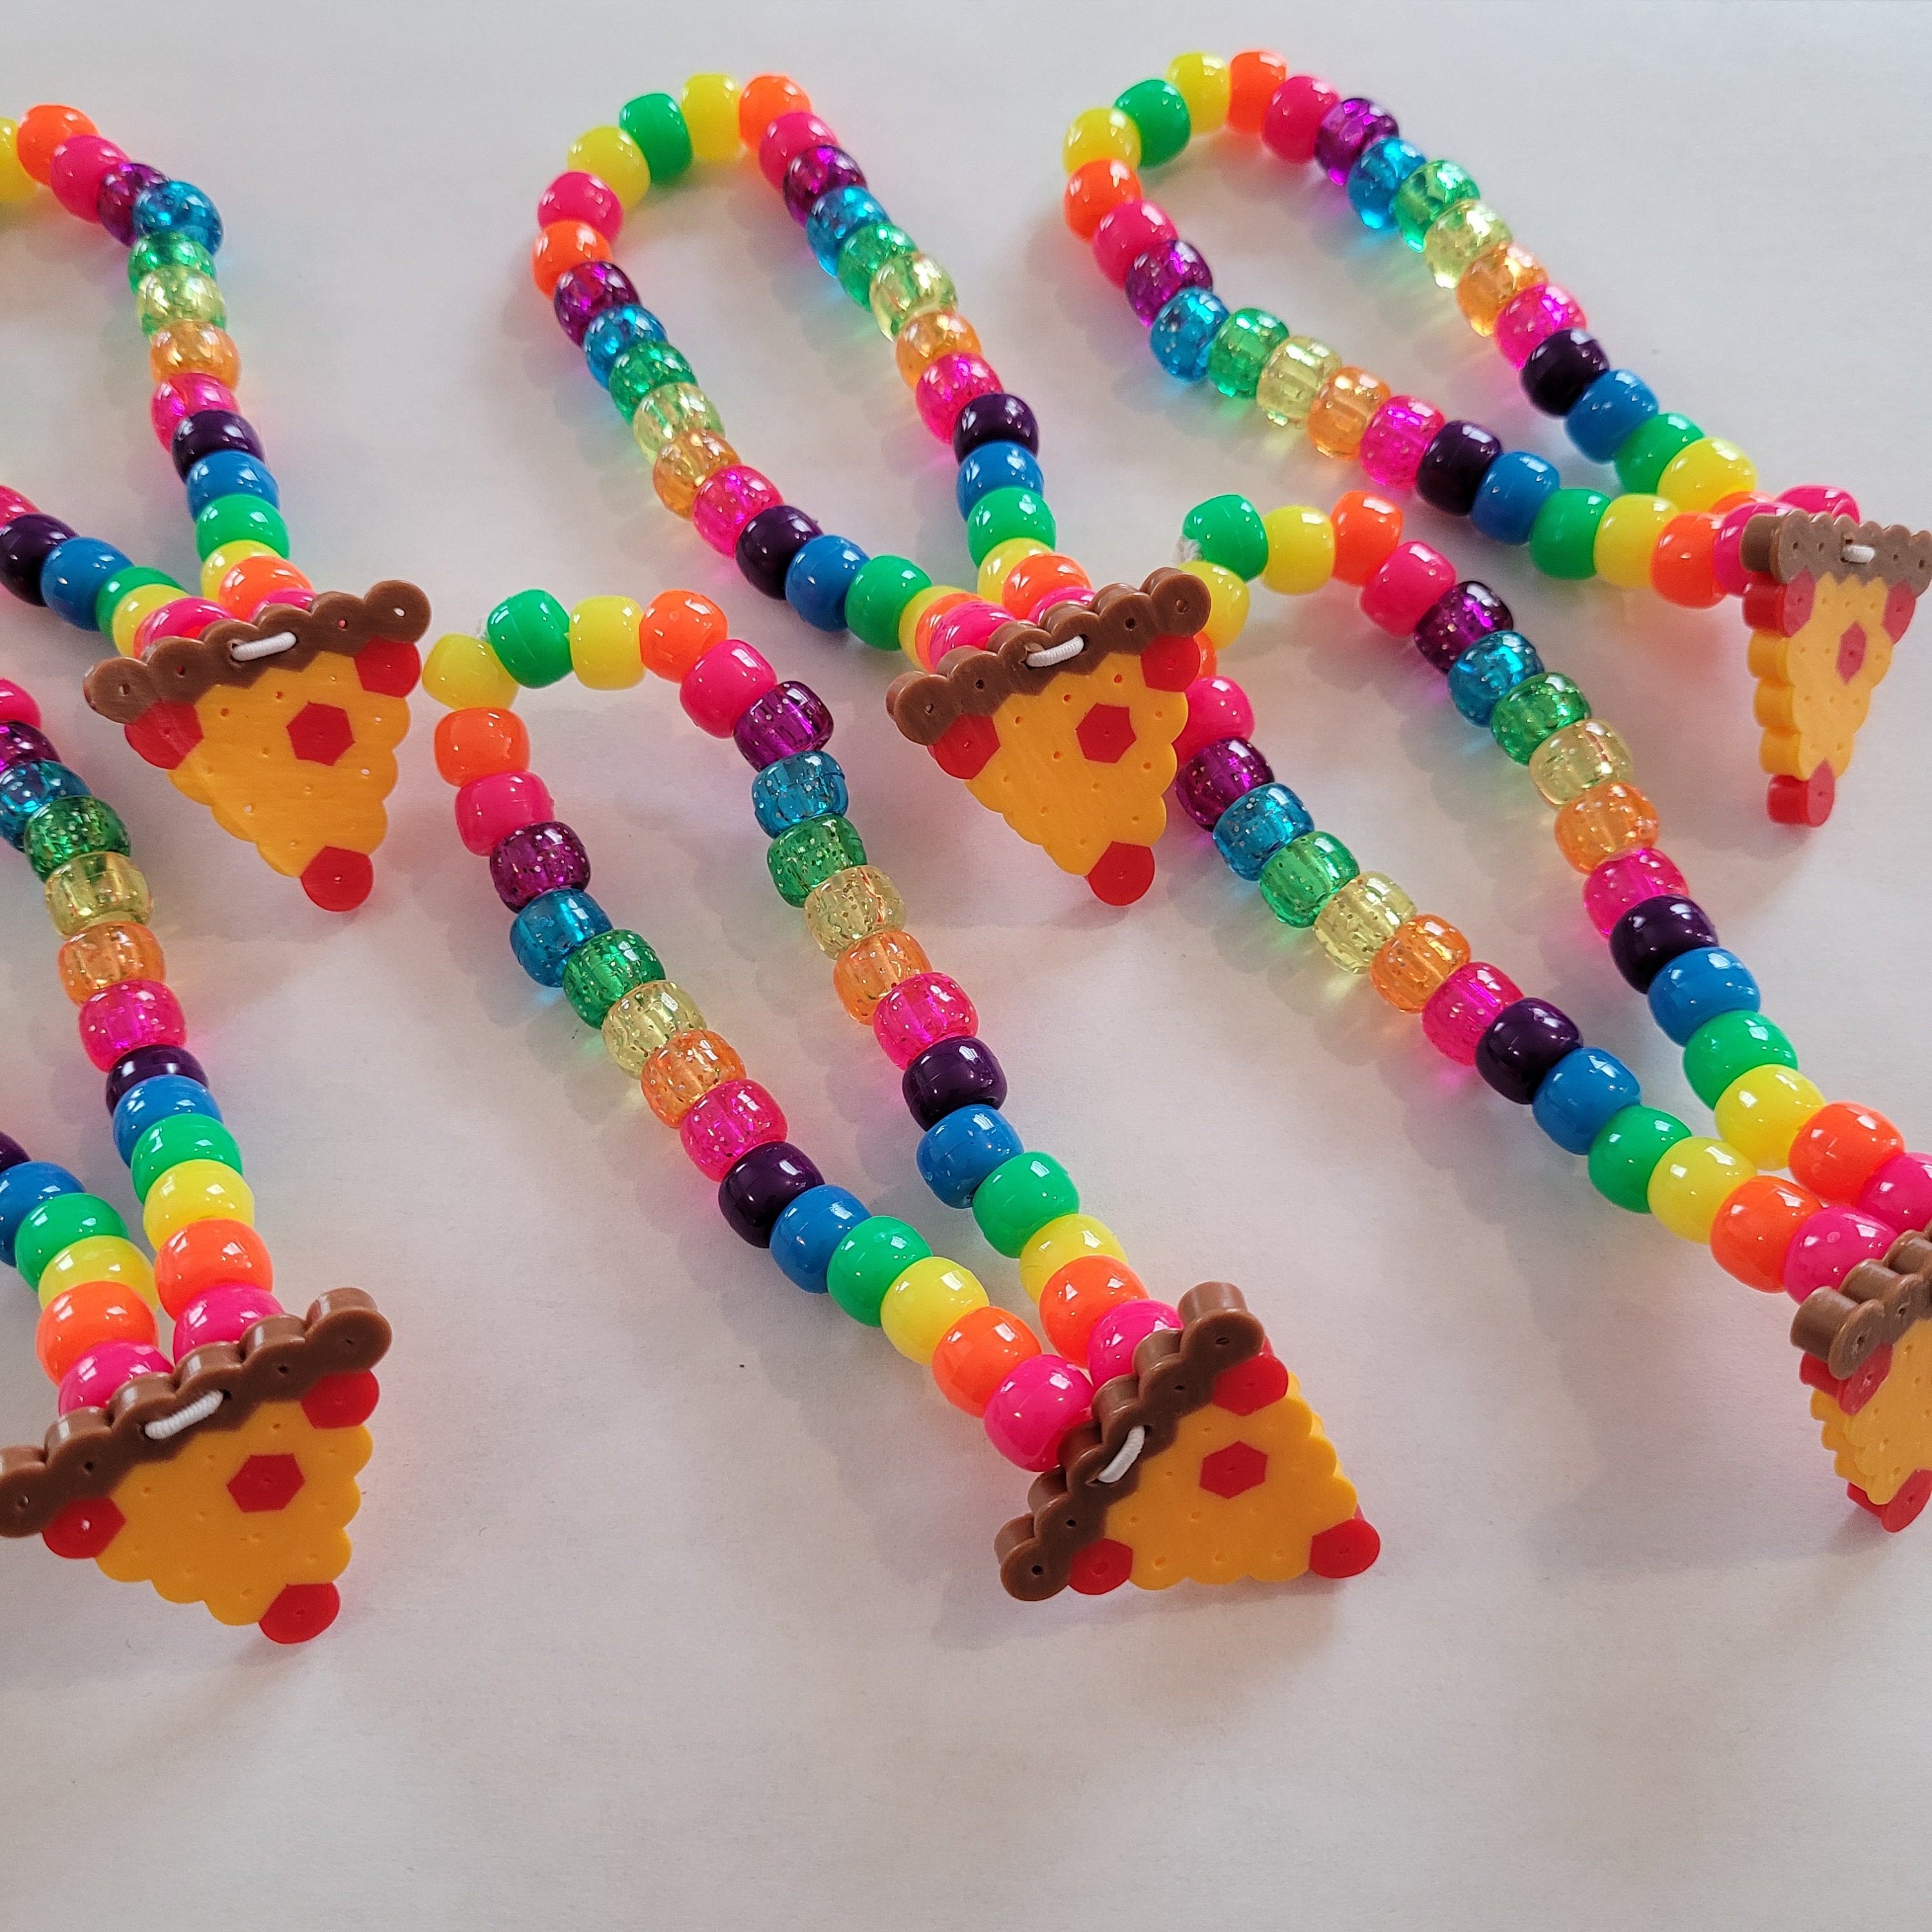 19 KANDI BRACELETS - RAVE / EDM / PLUR / FESTIVAL - Multicolored Pony Beads